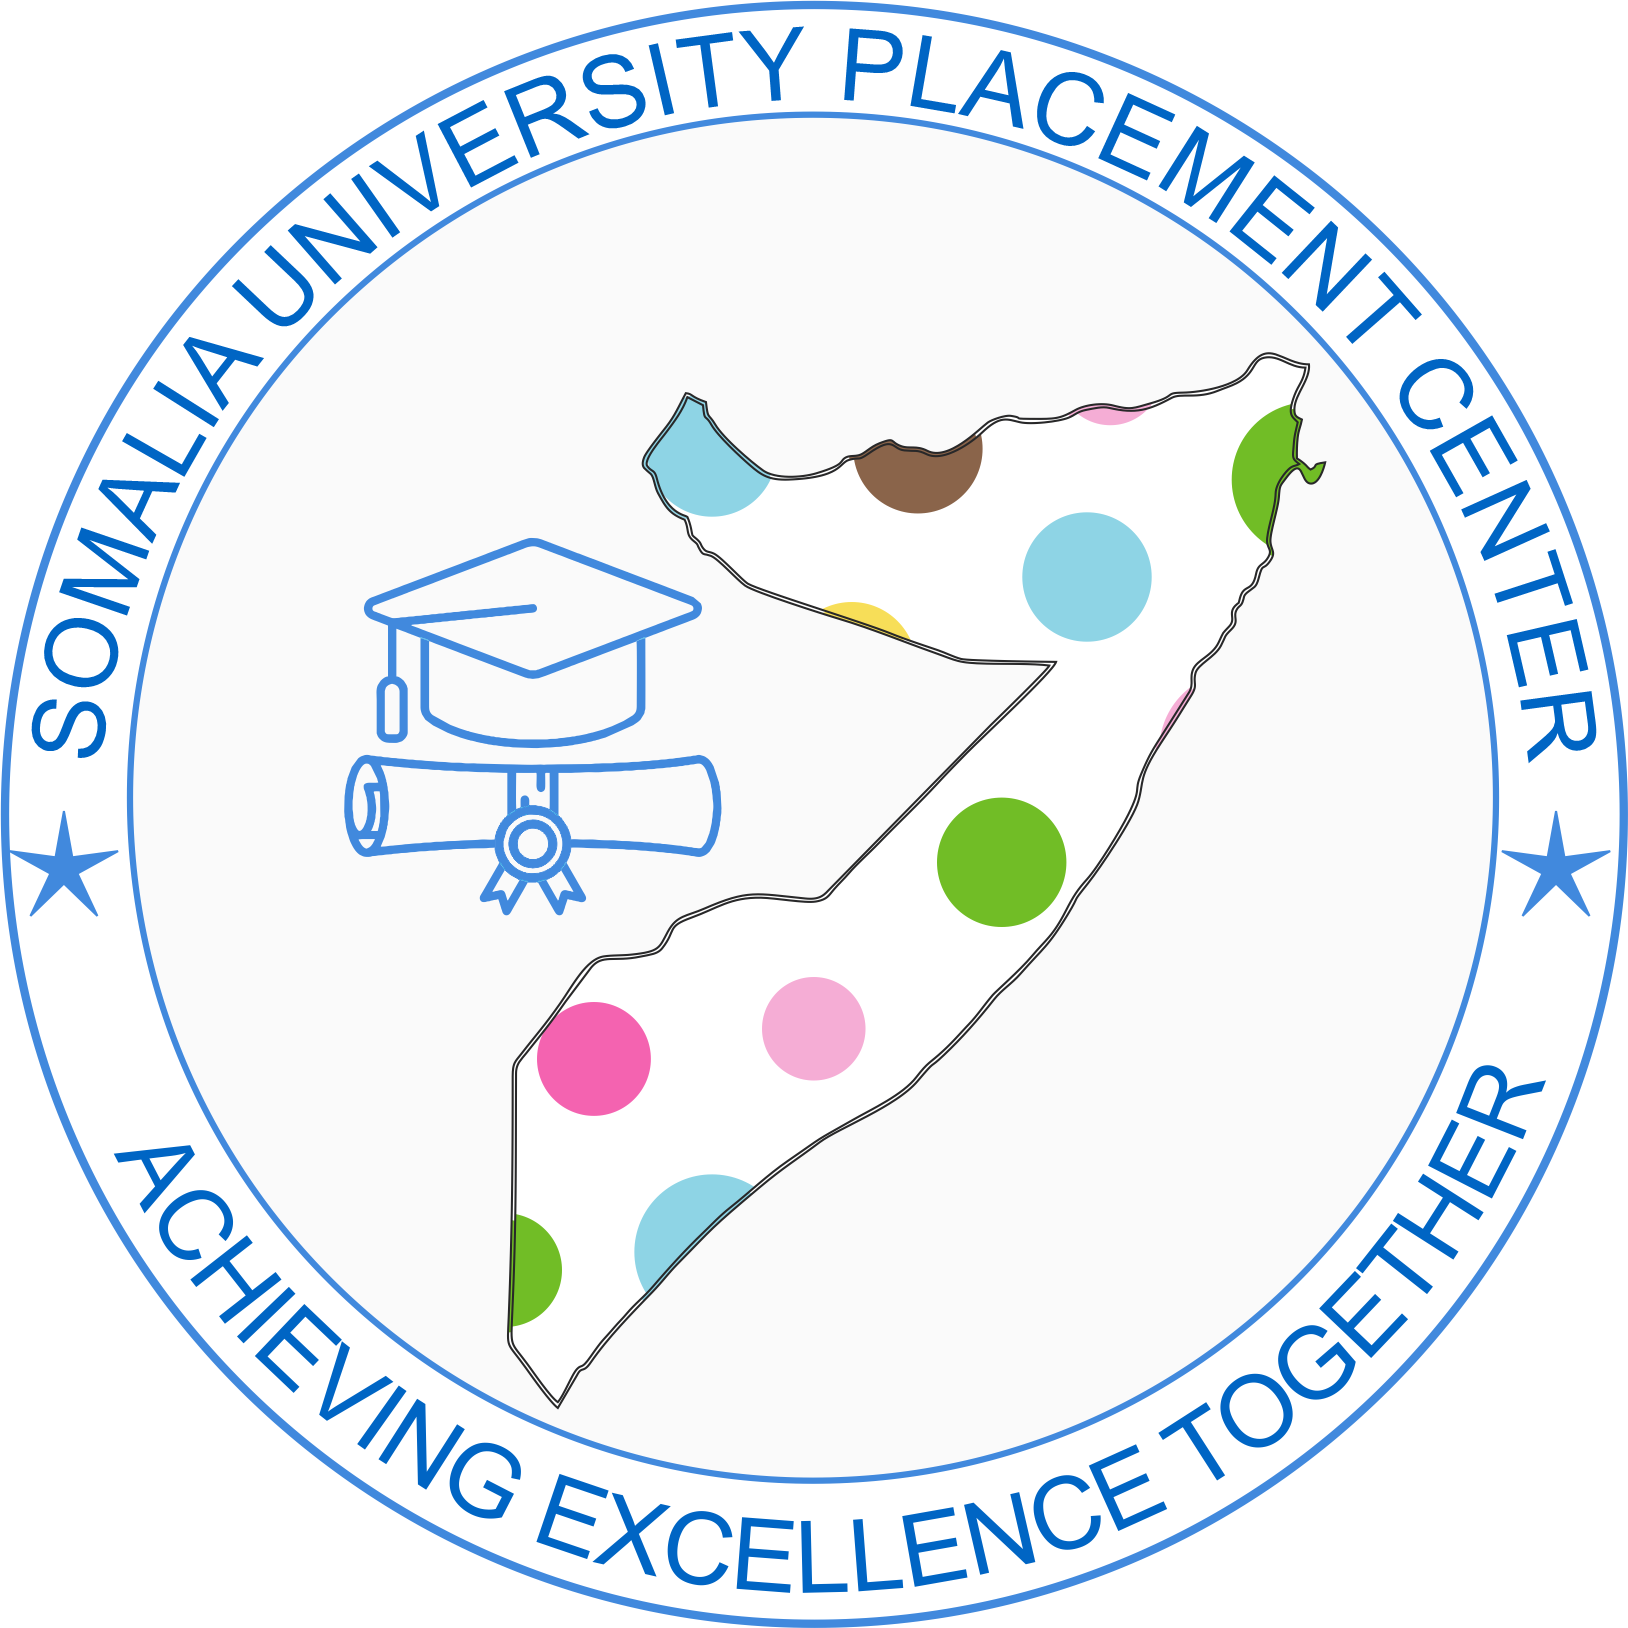 somali university placement center